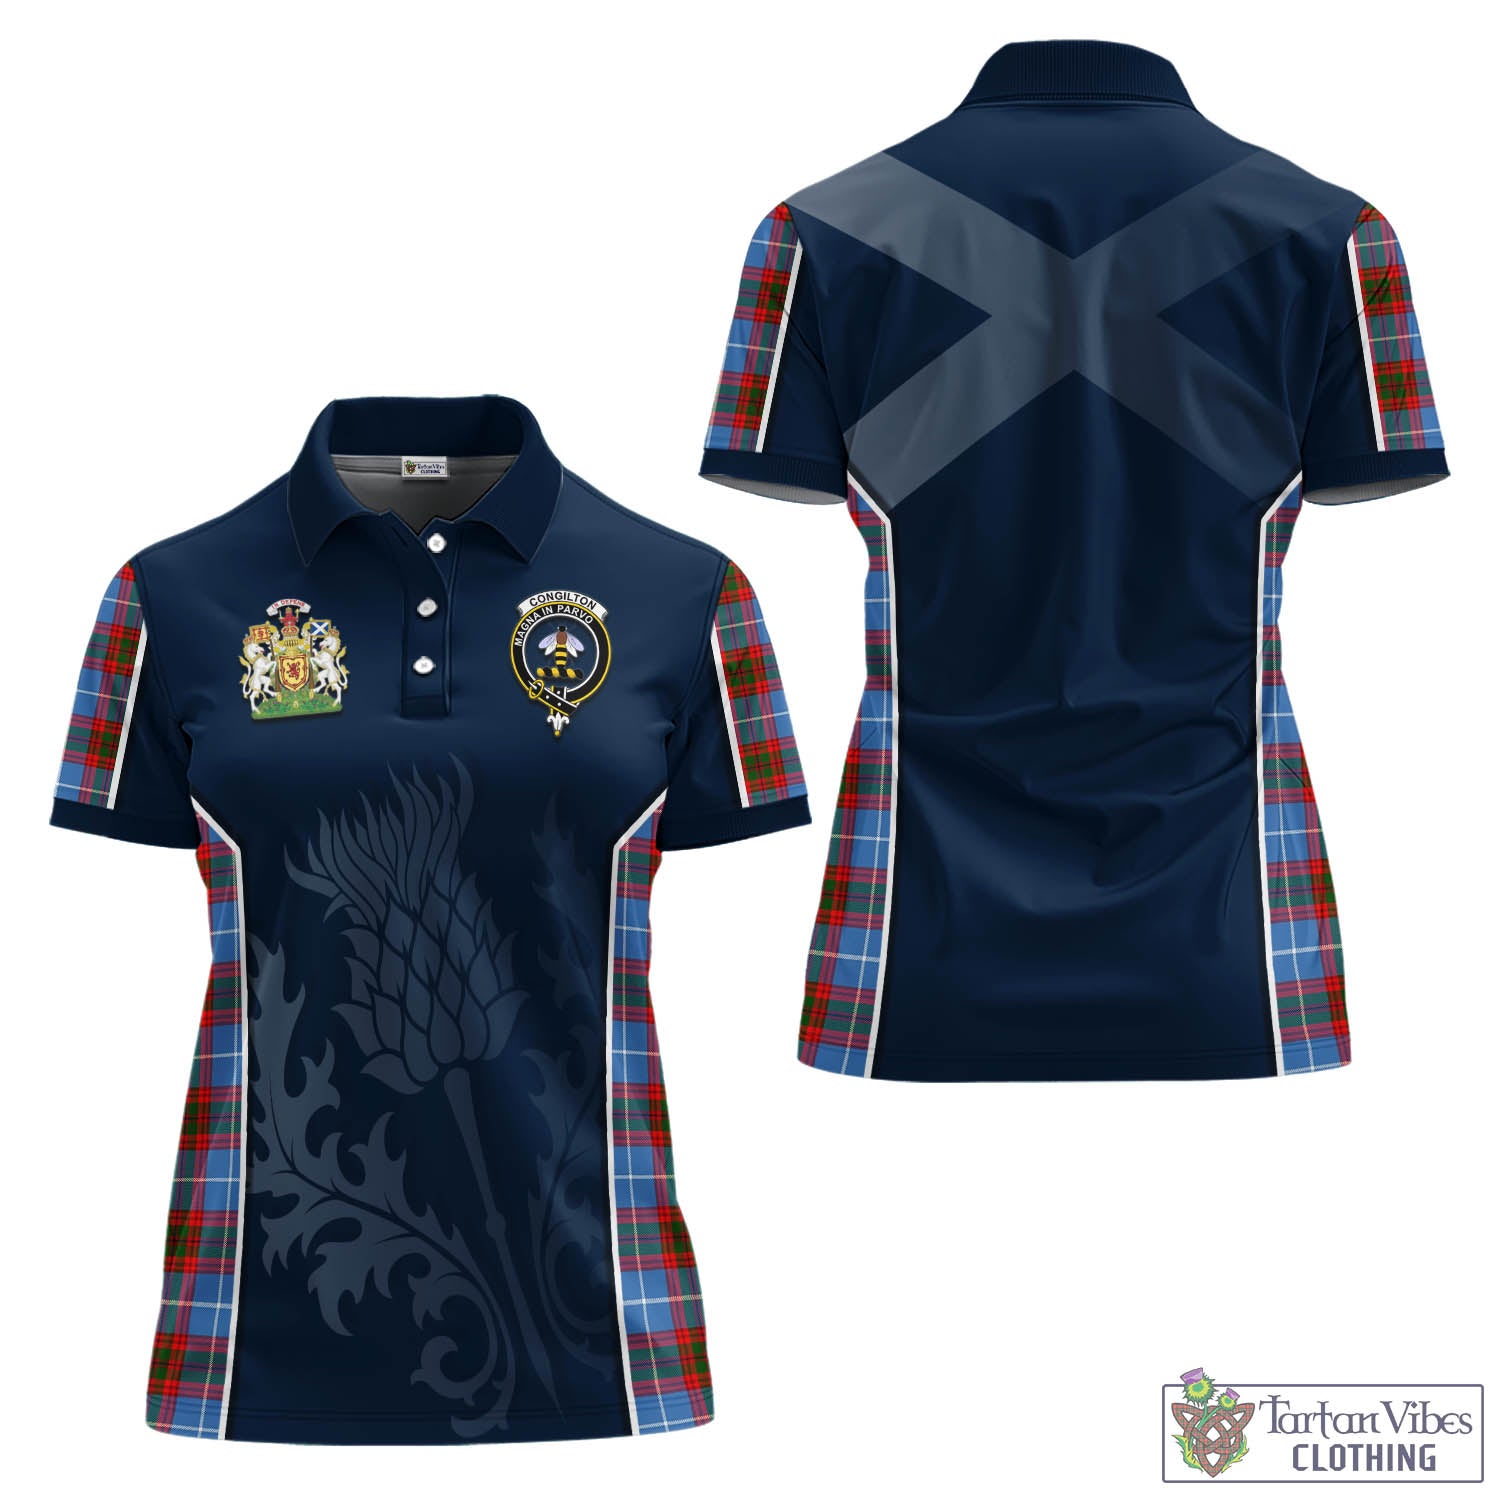 Tartan Vibes Clothing Congilton Tartan Women's Polo Shirt with Family Crest and Scottish Thistle Vibes Sport Style